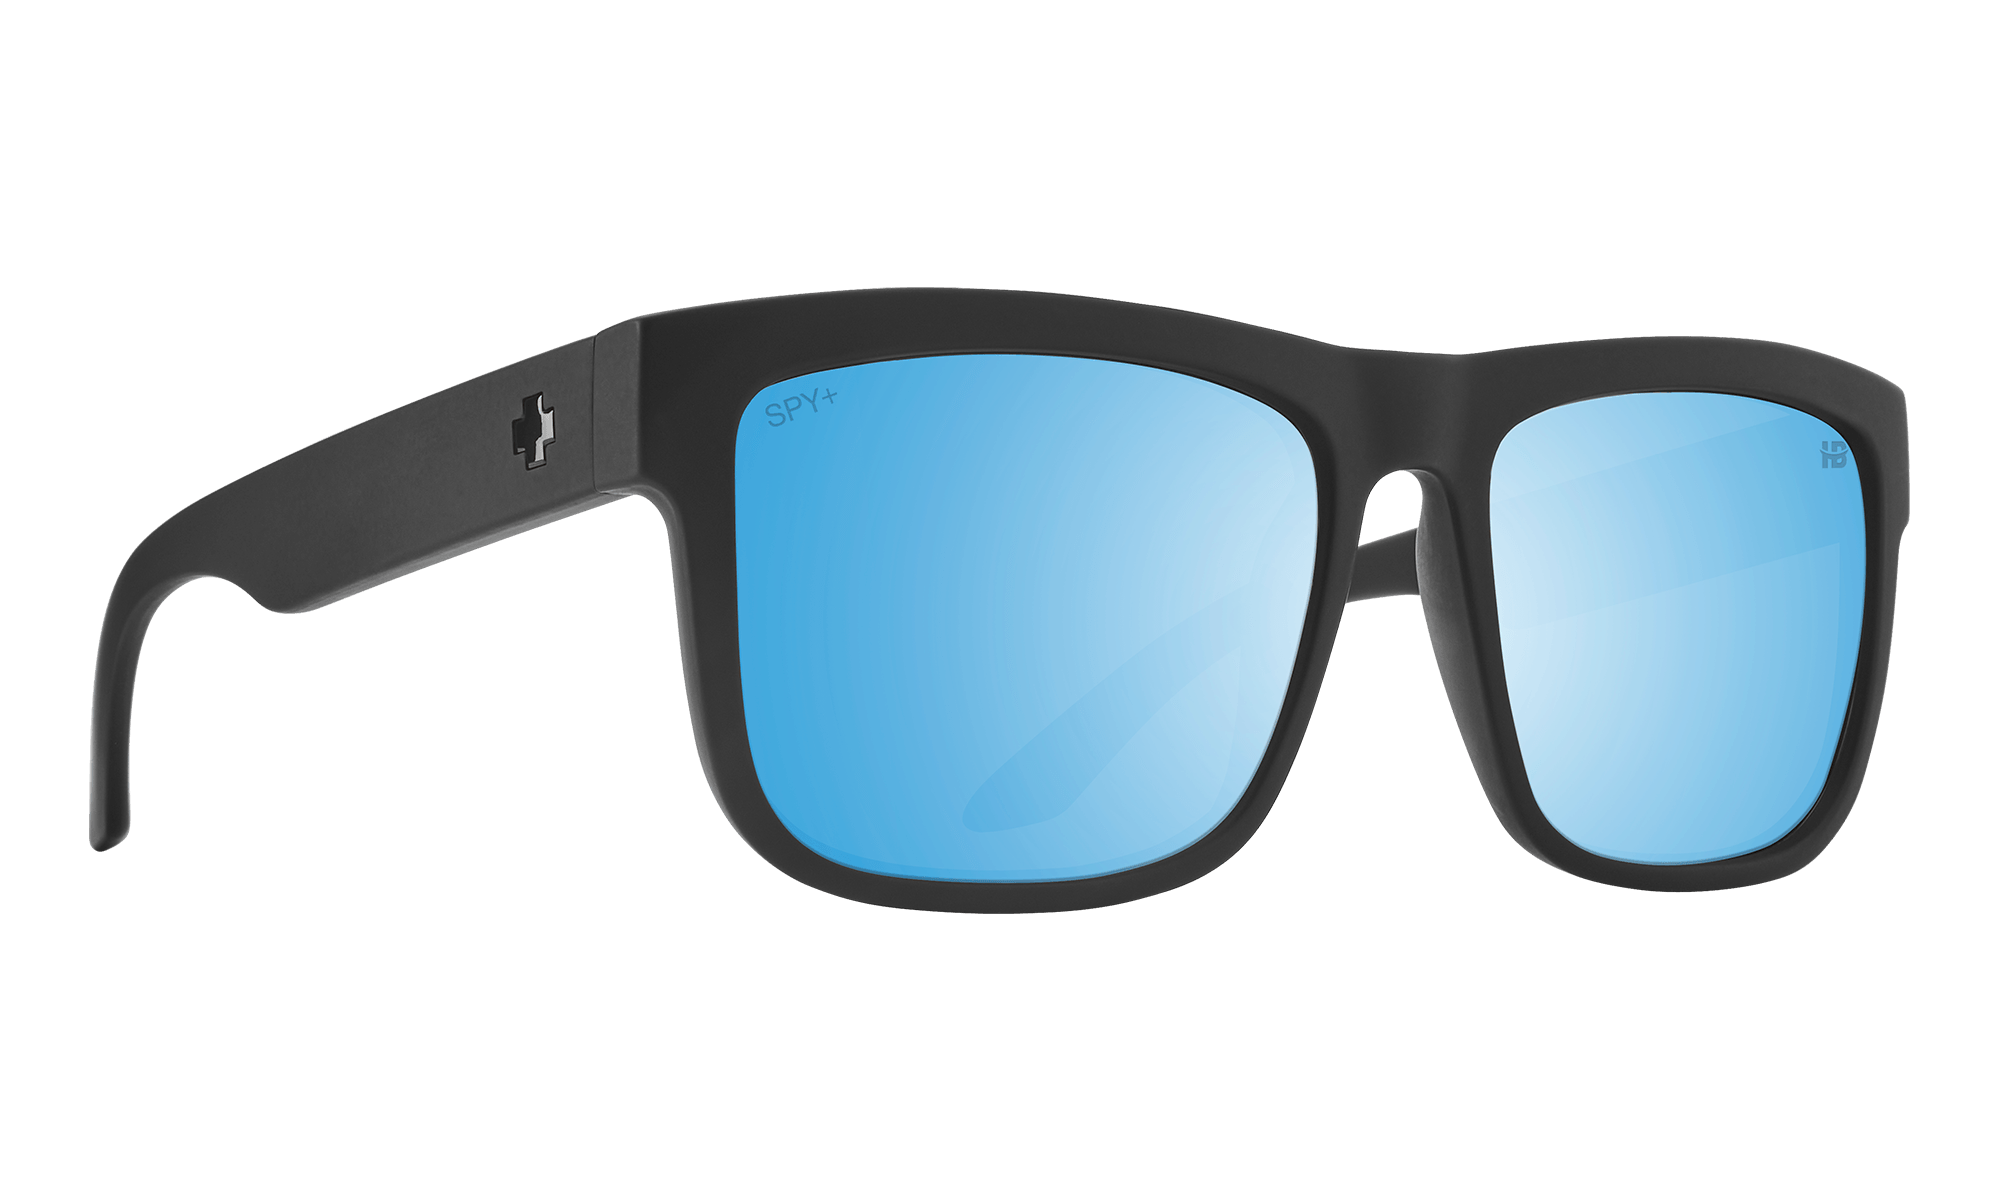 SPY Discord Matte Black - Happy Boost Bronze Ice Blue Spectra Mirror Polarized Sunglasses Sunglasses Spy 